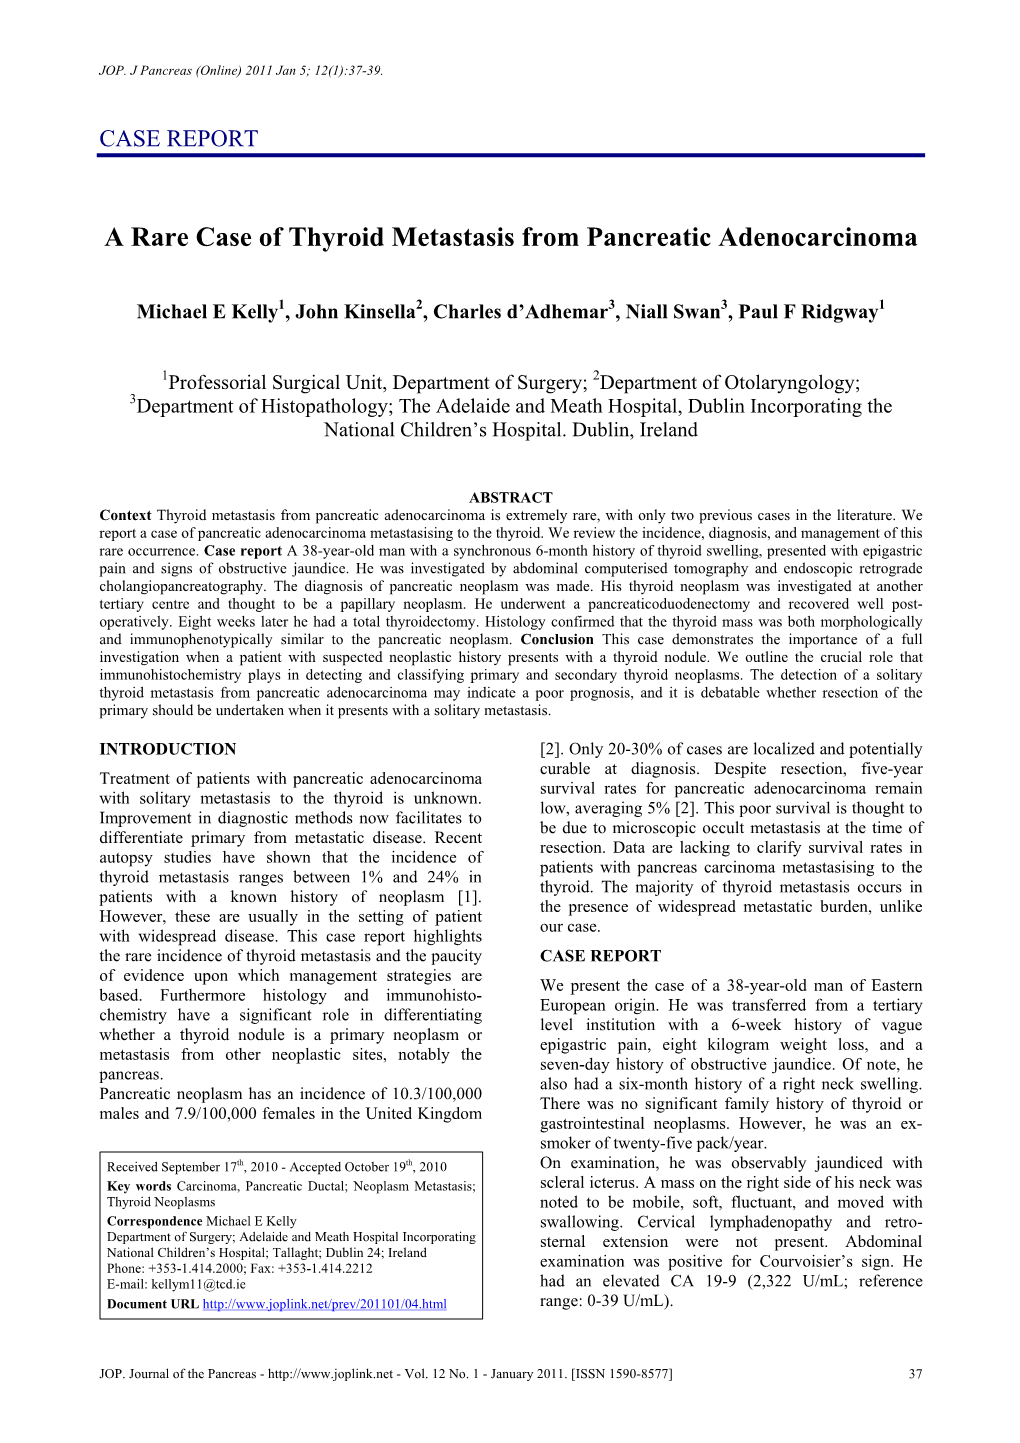 A Rare Case of Thyroid Metastasis from Pancreatic Adenocarcinoma